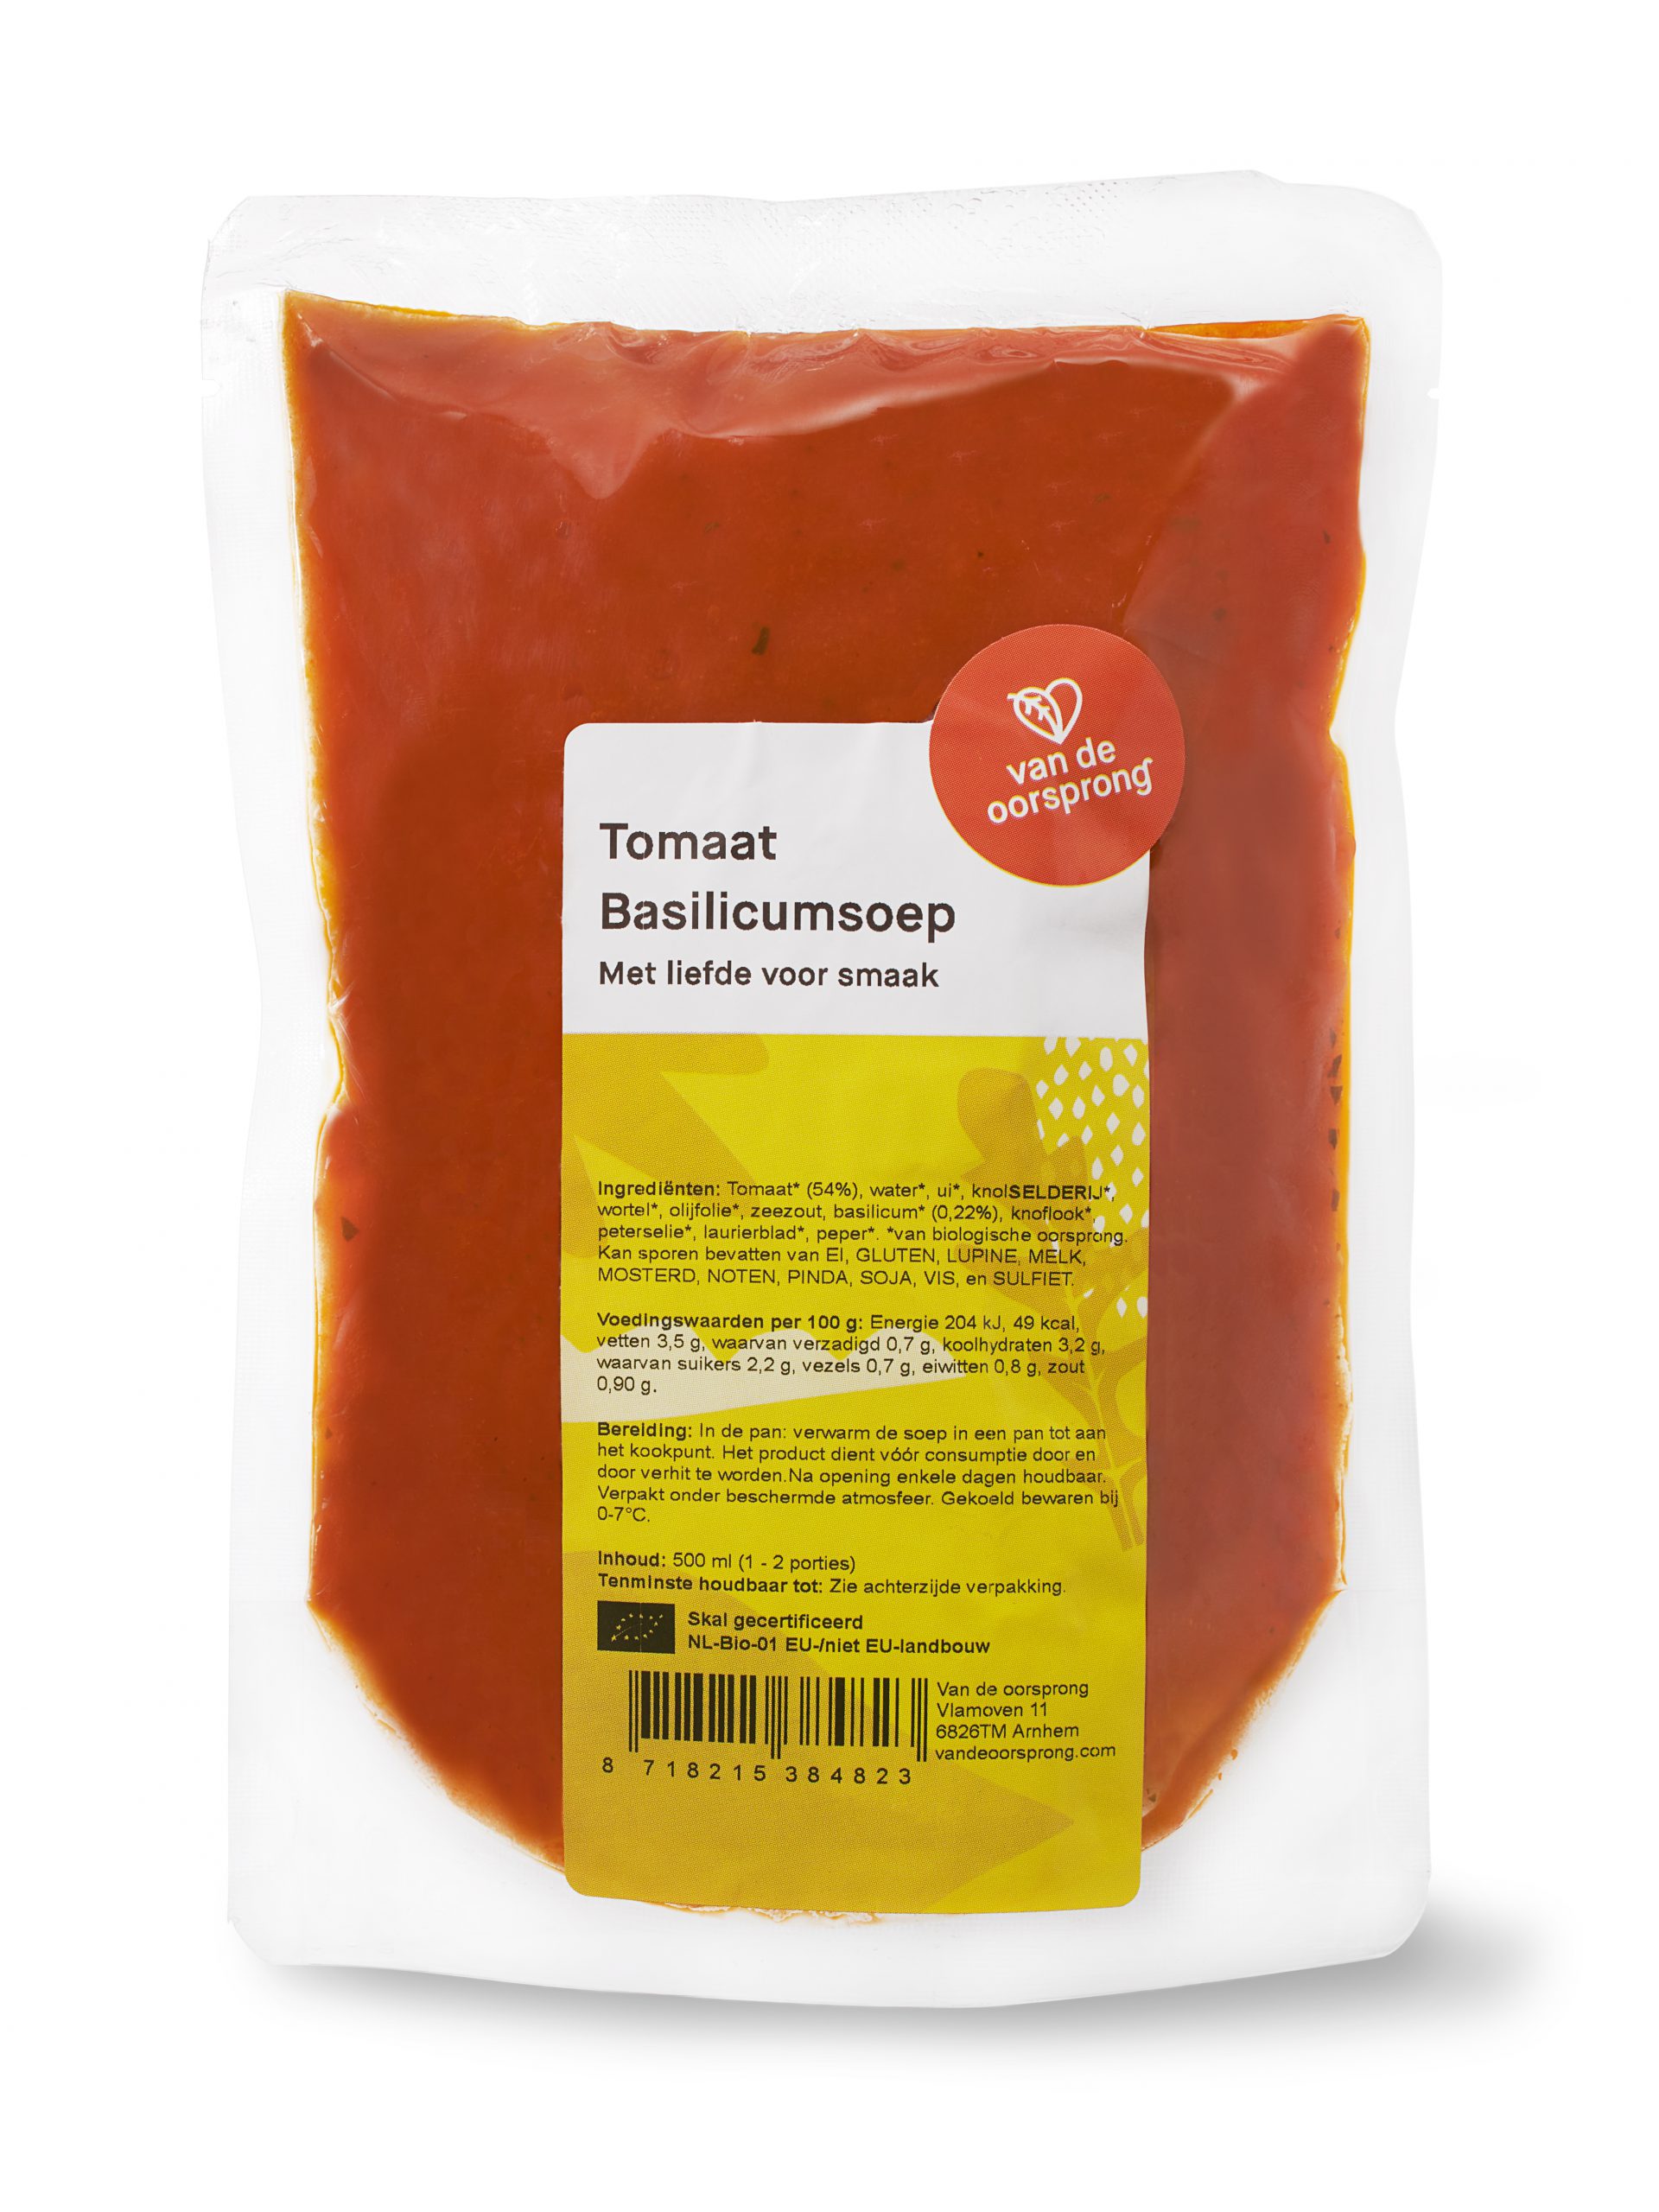 Tomaat-basilicumsoep